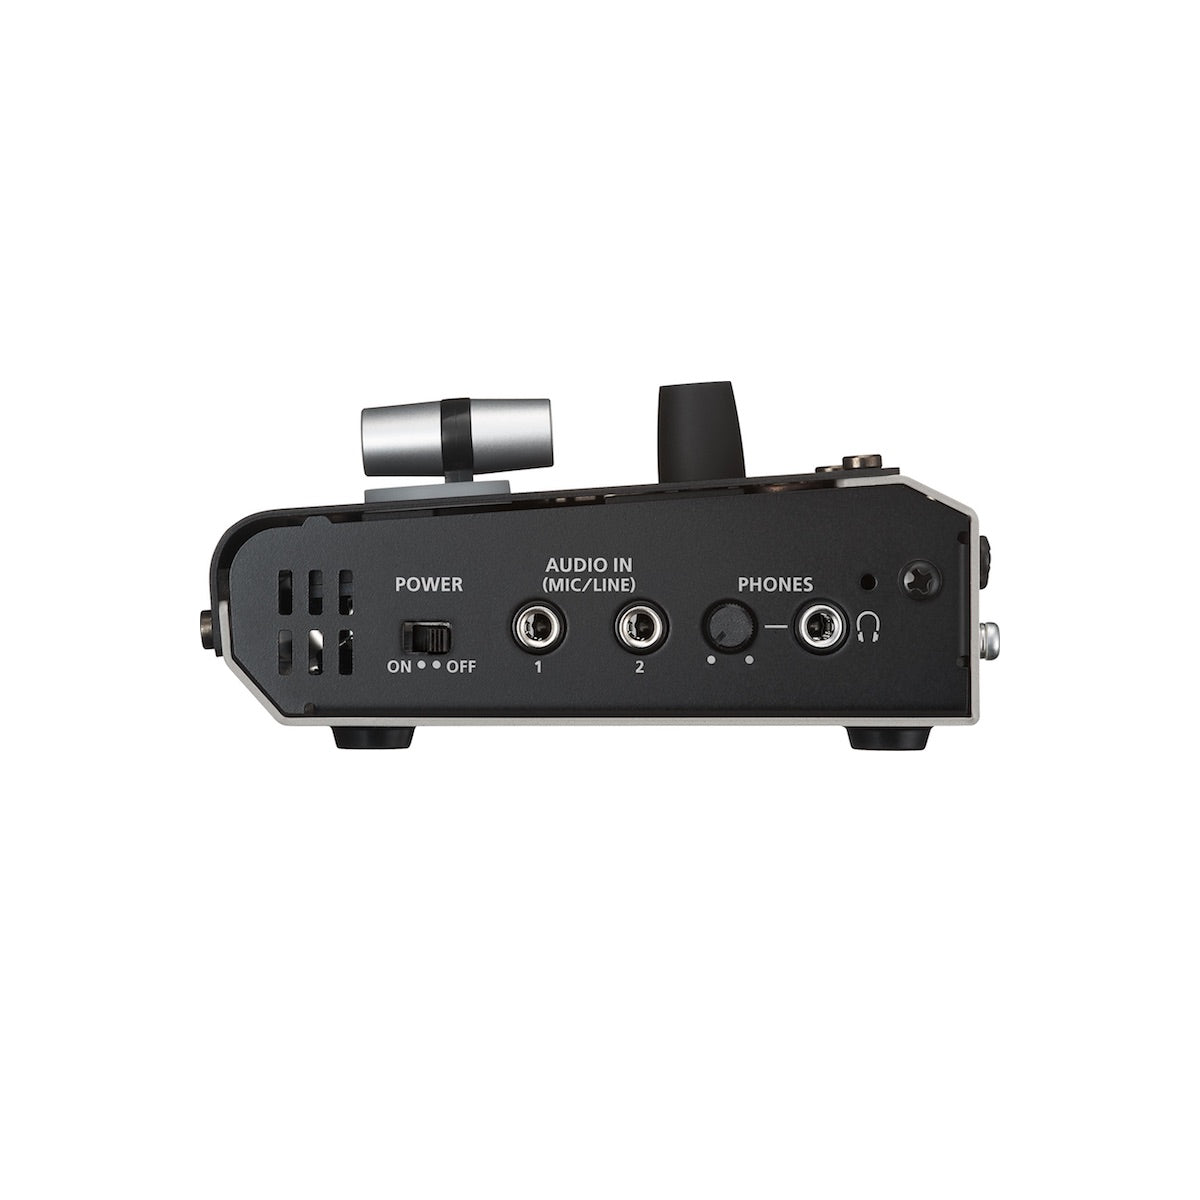 Roland V-02HD MK II - Streaming Video Mixer